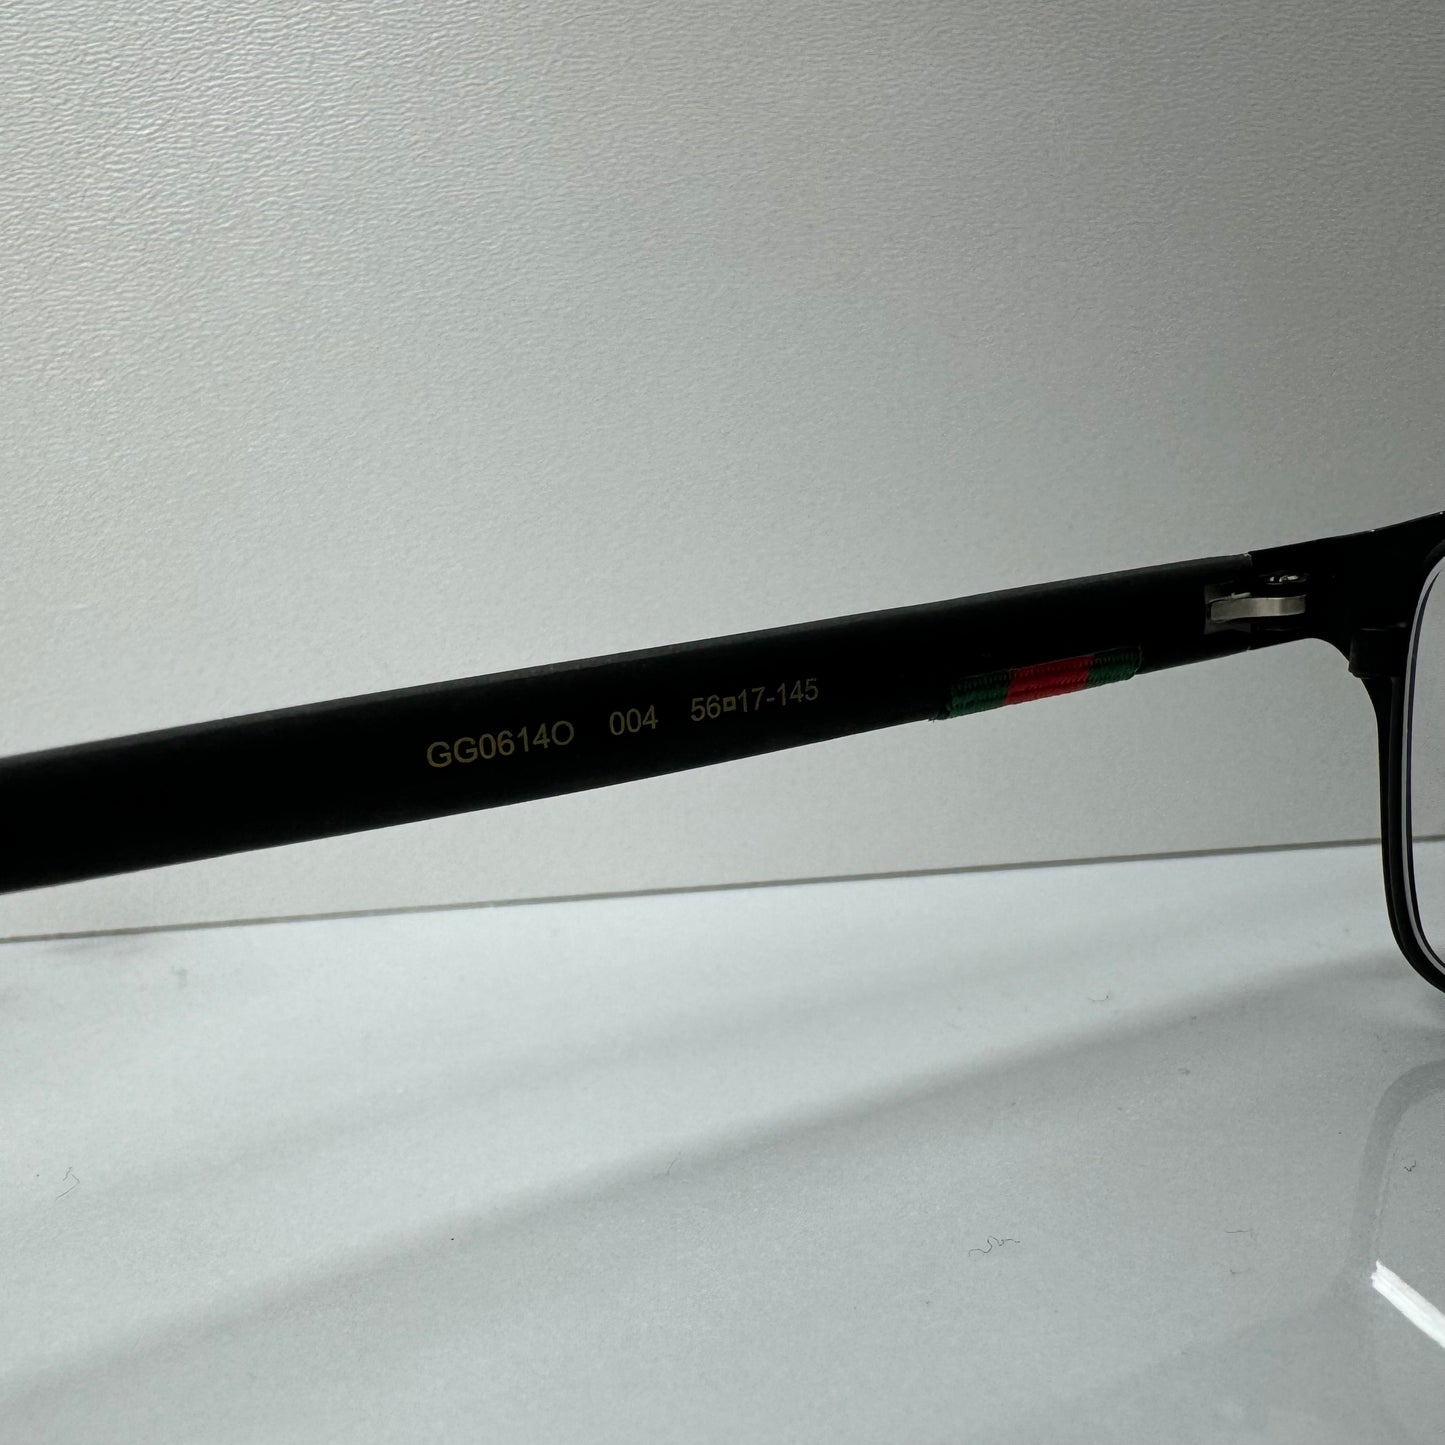 Gucci GG0614O 004 Prescription Glasses Rectangular Grey Optical Eyeglasses